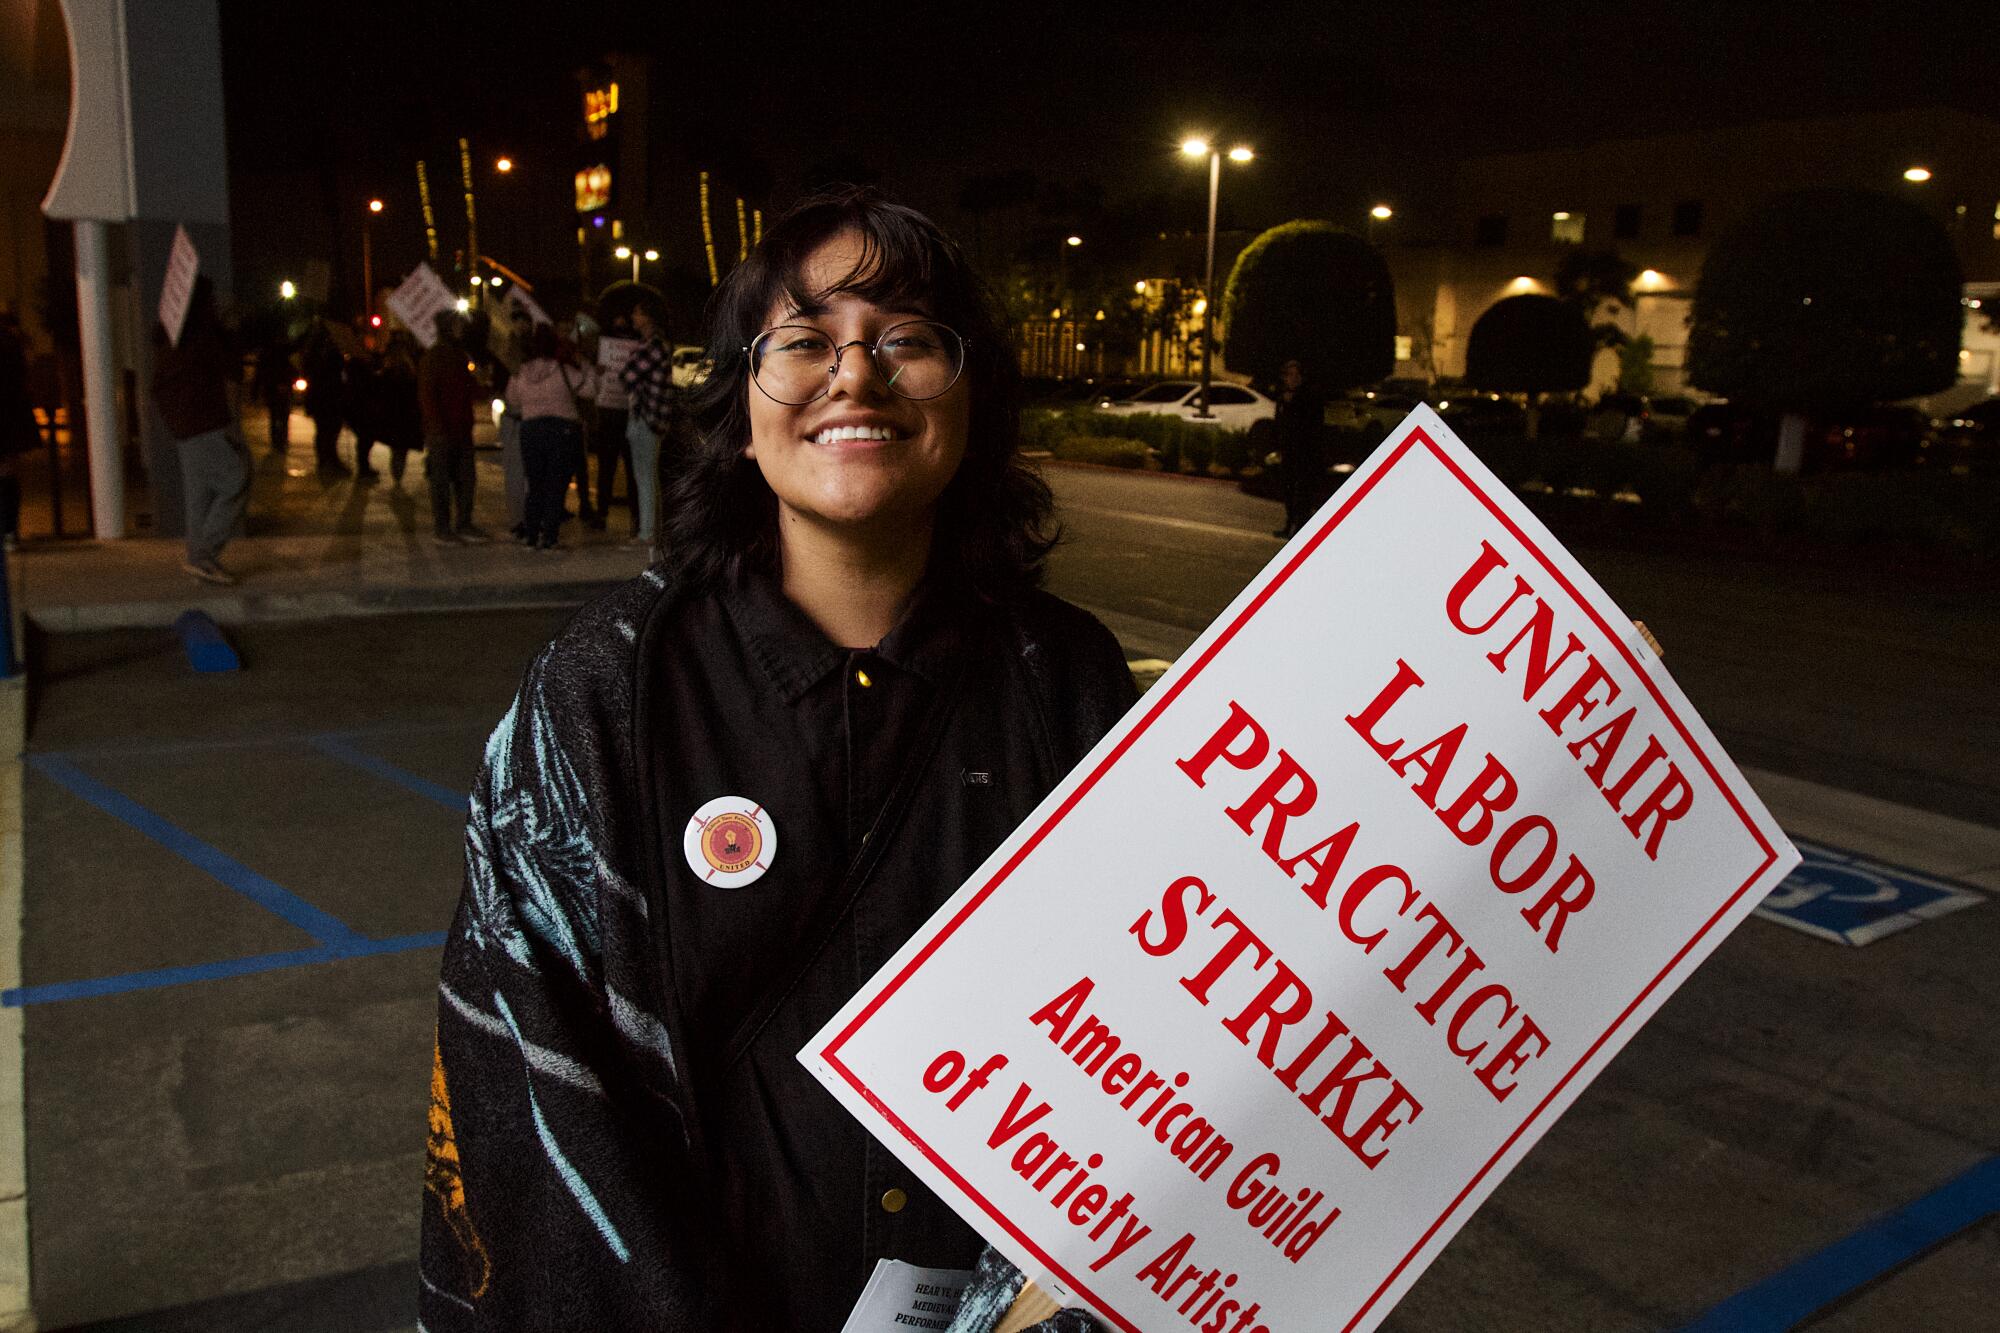 Trumpeter Lizbeth Figueroa stands smiling just outside the entrance, holding an "UNFAIR LABOR PRACTICE STRIKE" picket sign.